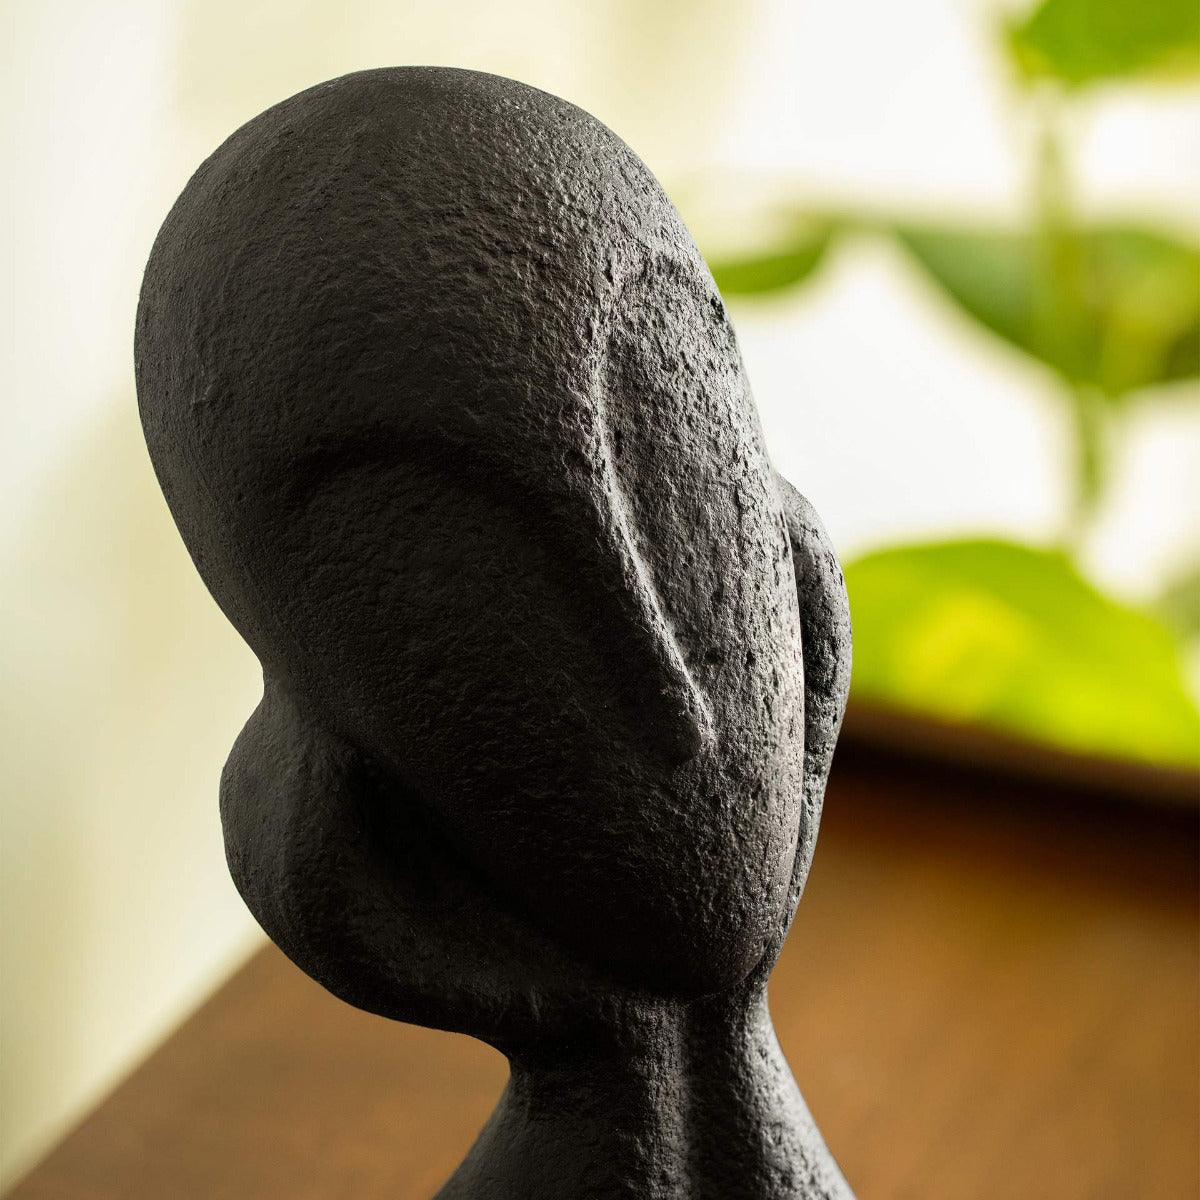 Spellbound Face Ecomix Sculpture - Black